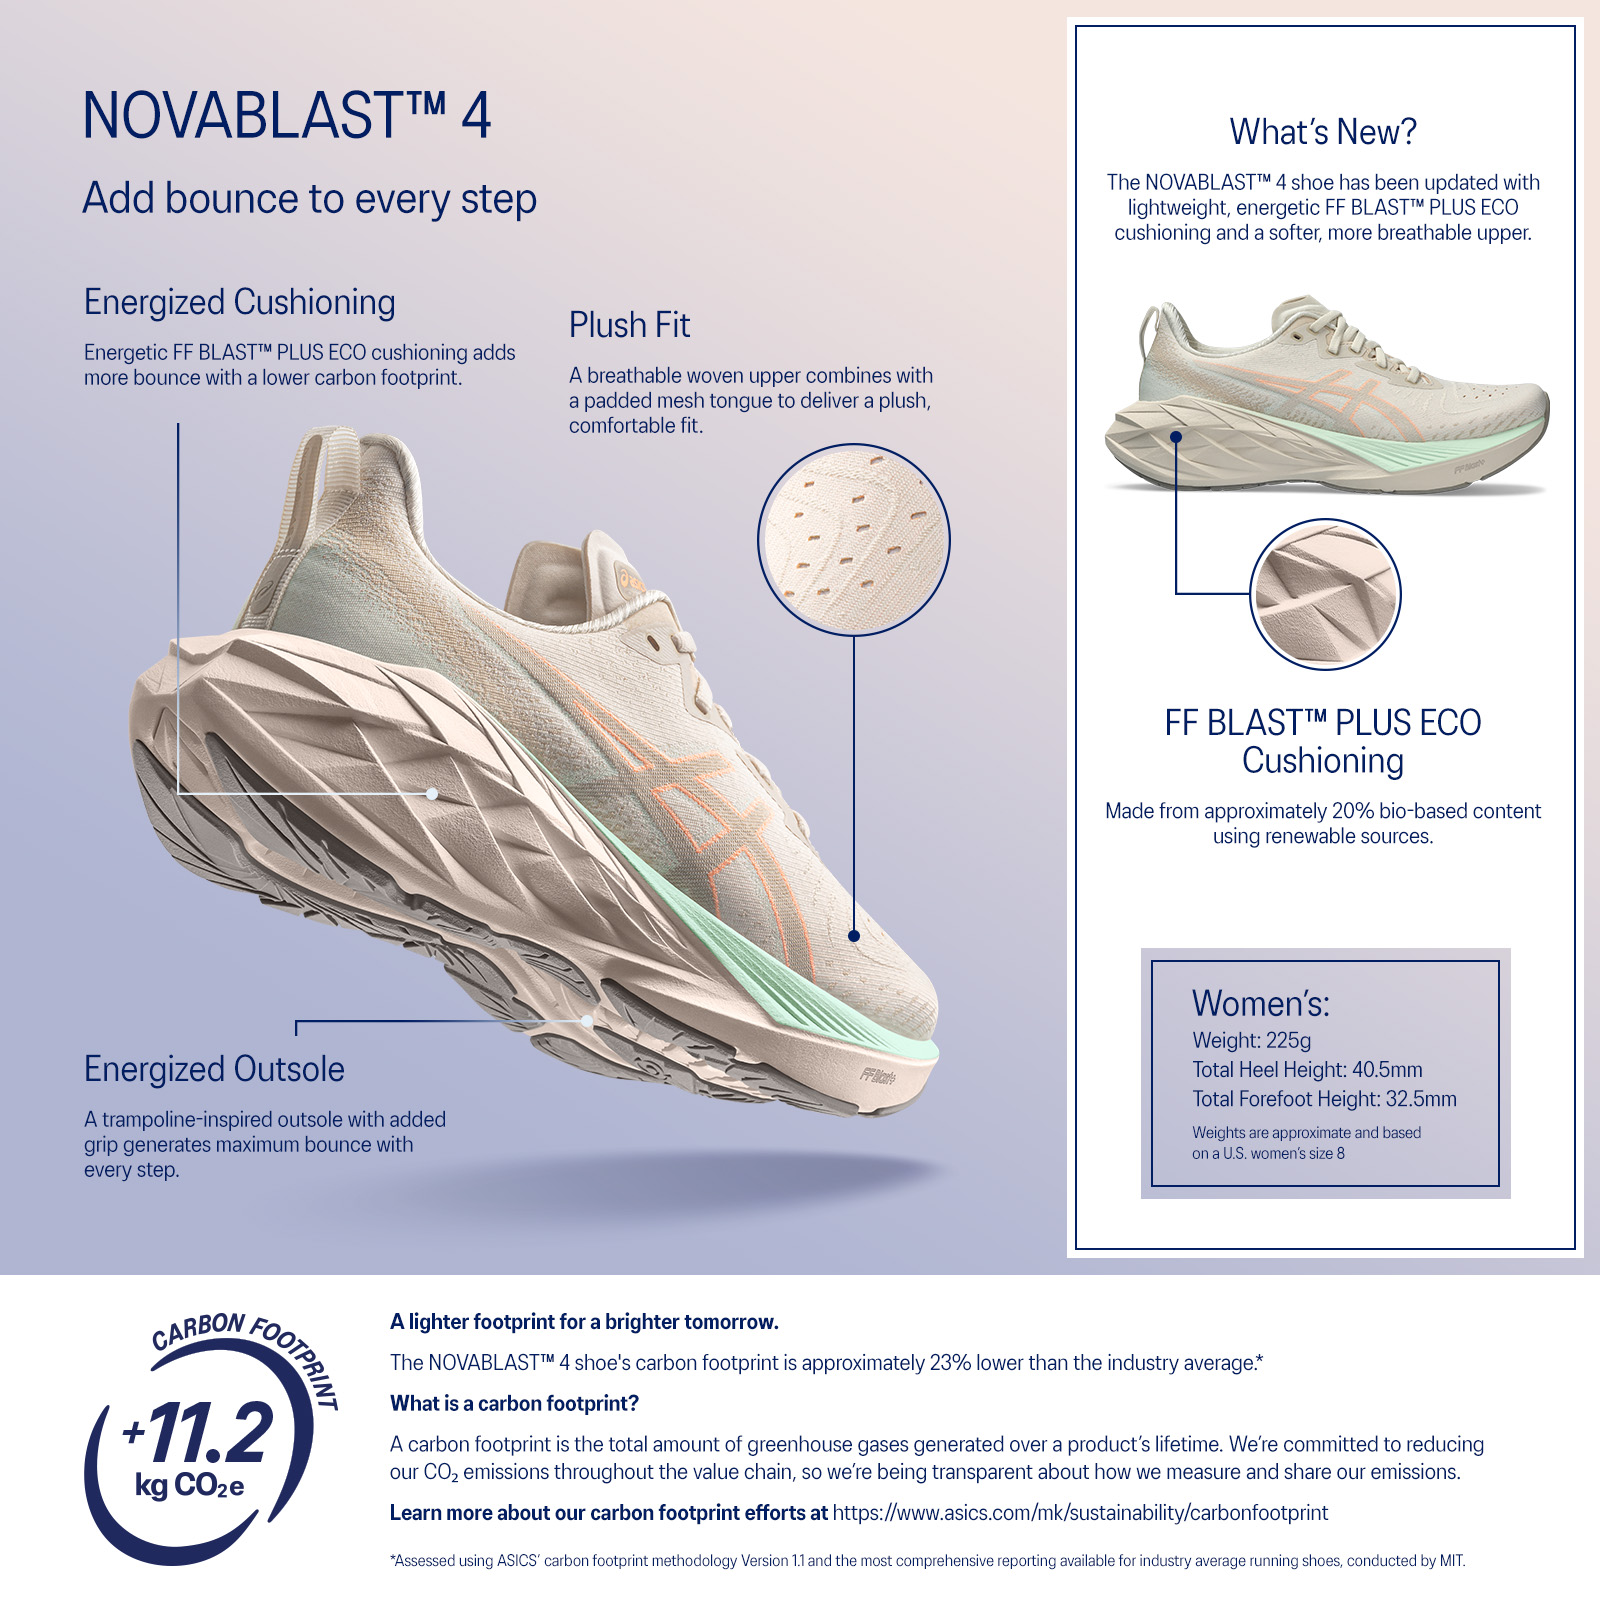 Trampoline-inspired outsole' for new ASICS NOVABLAST 4 shoe 